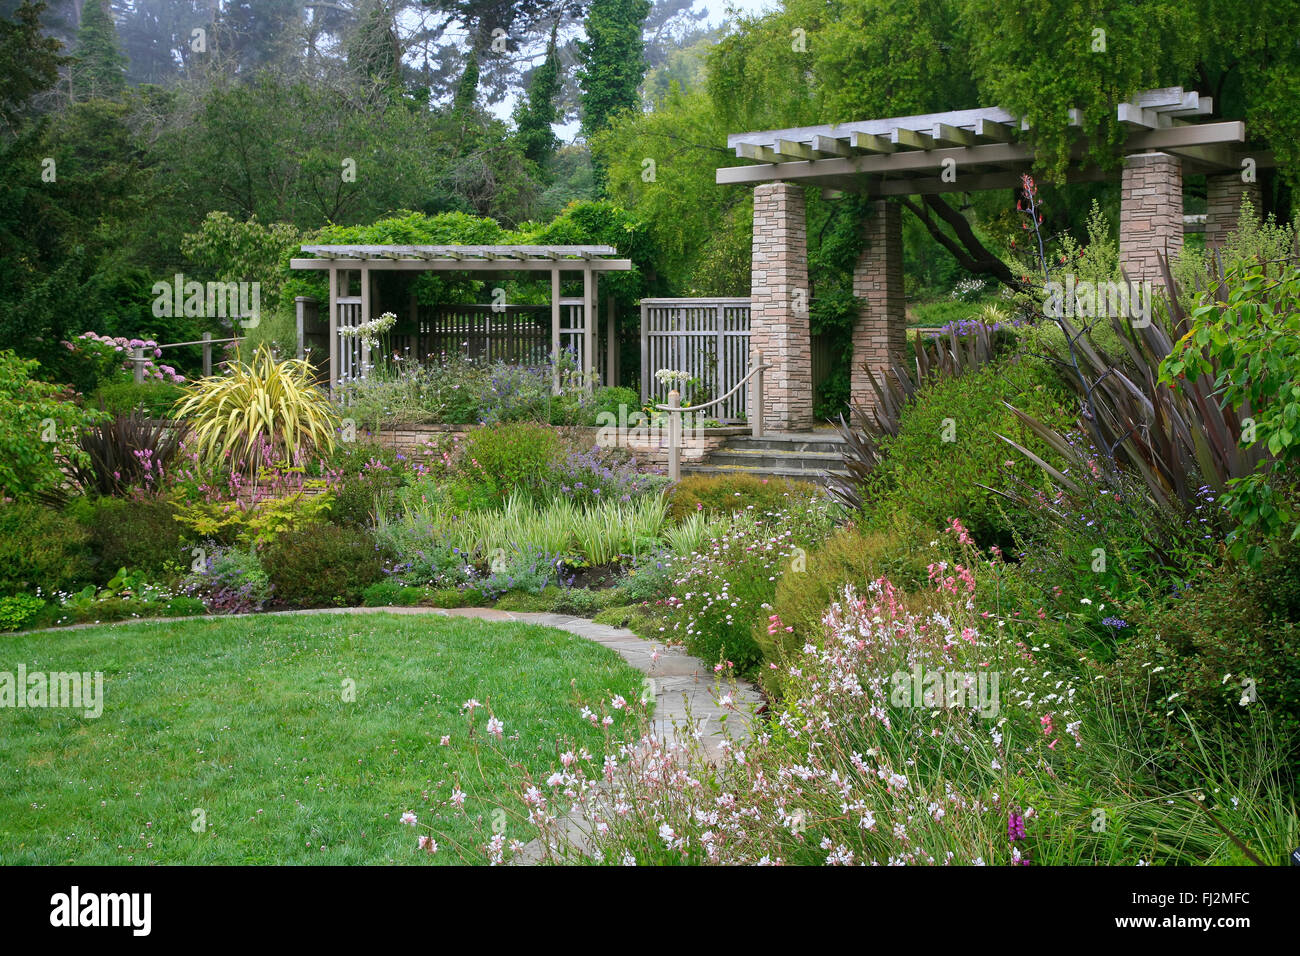 A Gazeo and flower beds in the SAN FRANCISCO BOTANICAL GARDENS - SAN FRANCISCO, CALIFORNIA Stock Photo